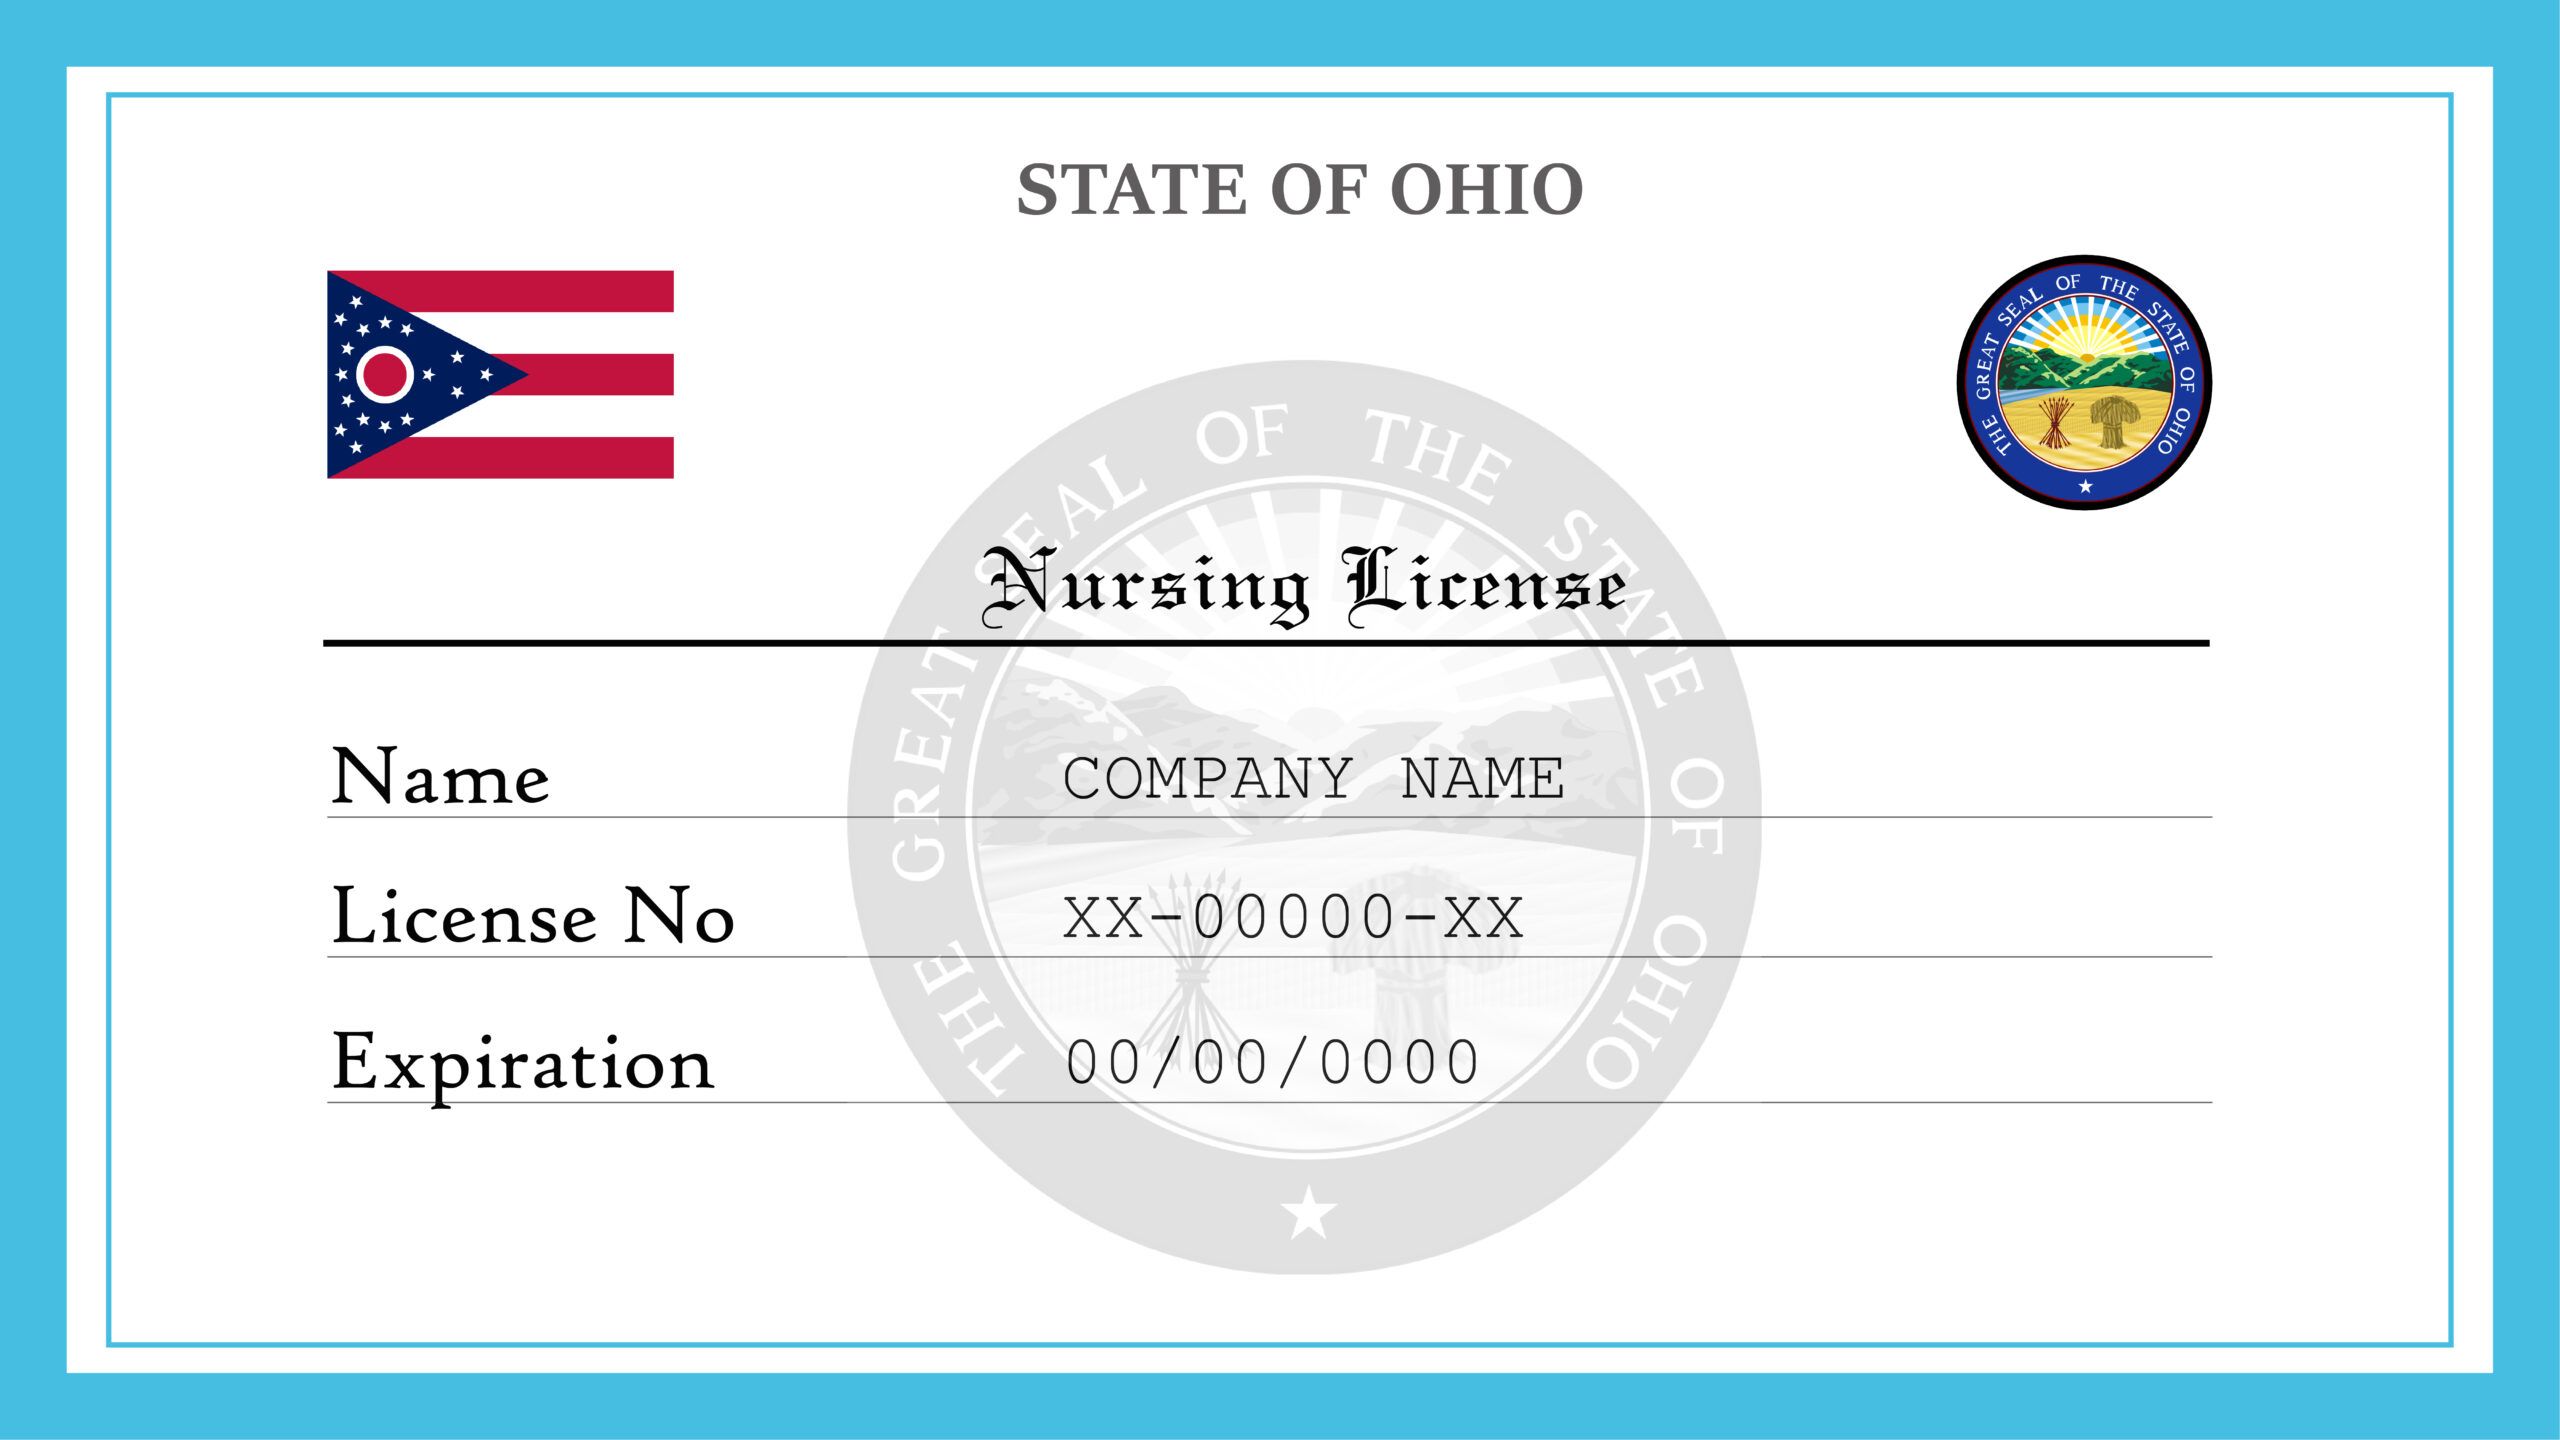 Ohio Nursing License Scaled 2f53277f22 